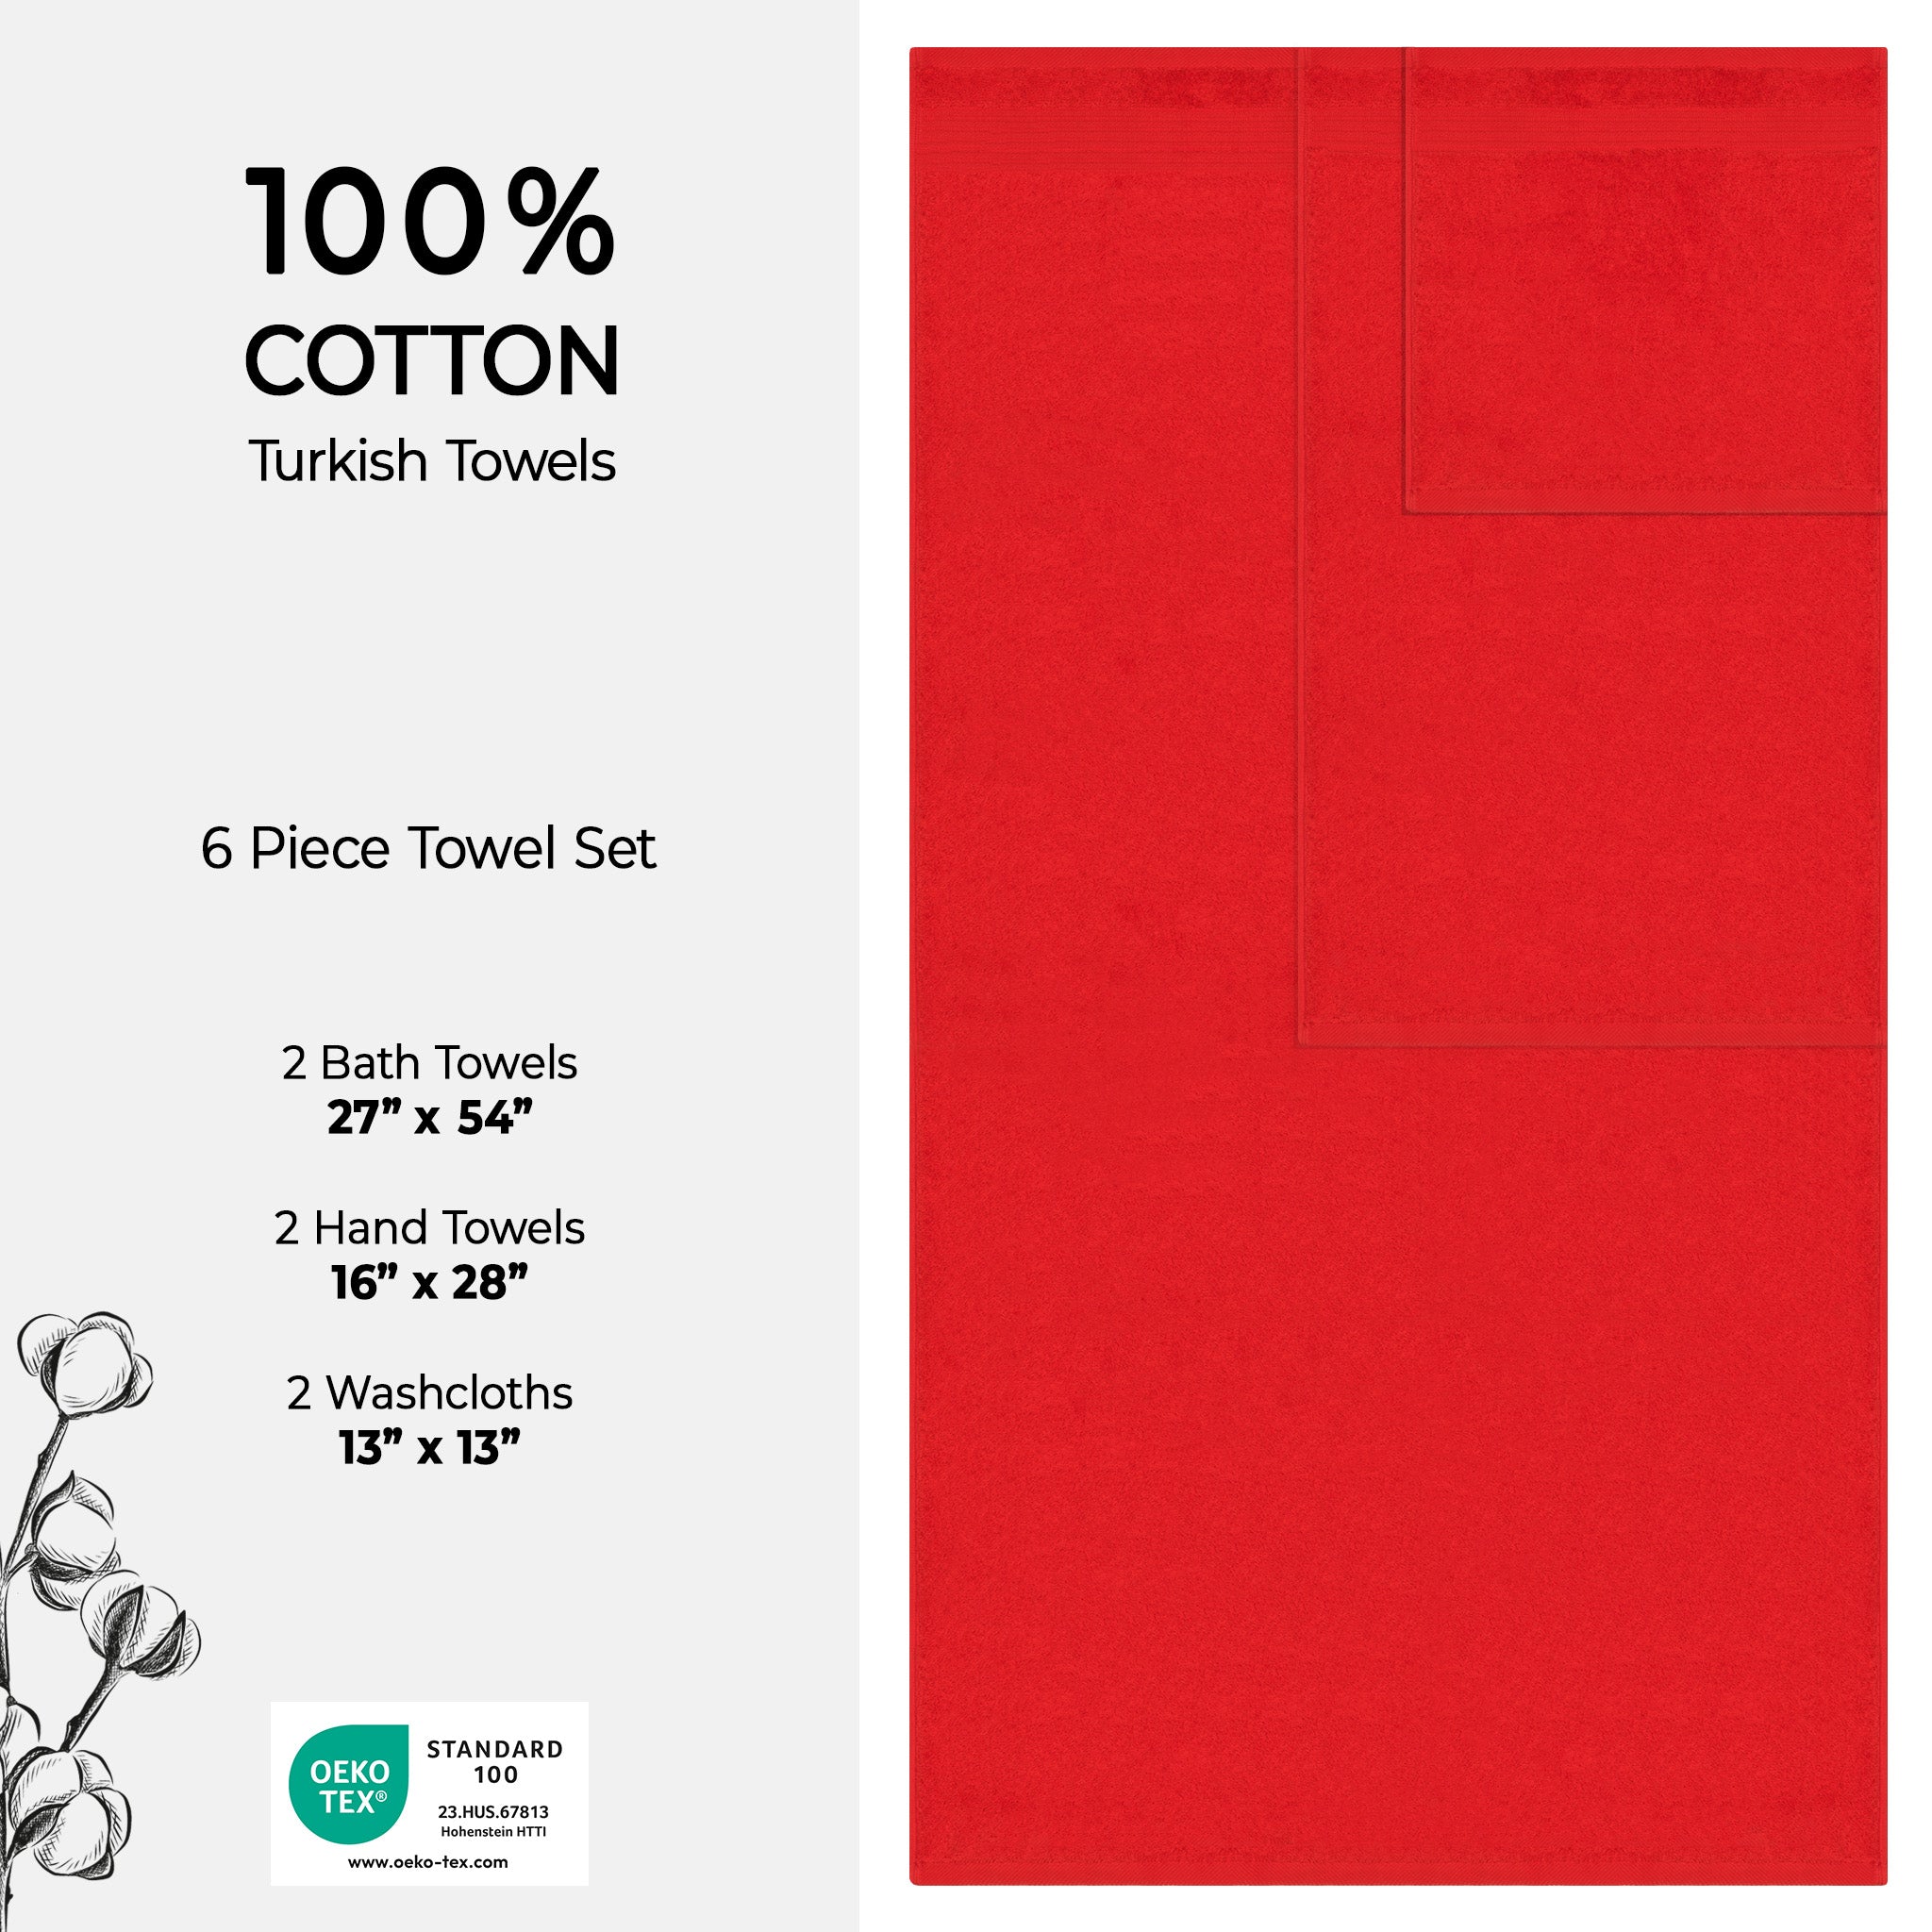 American Soft Linen Bekos 100% Cotton Turkish Towels 6 Piece Bath Towel Set -red-04